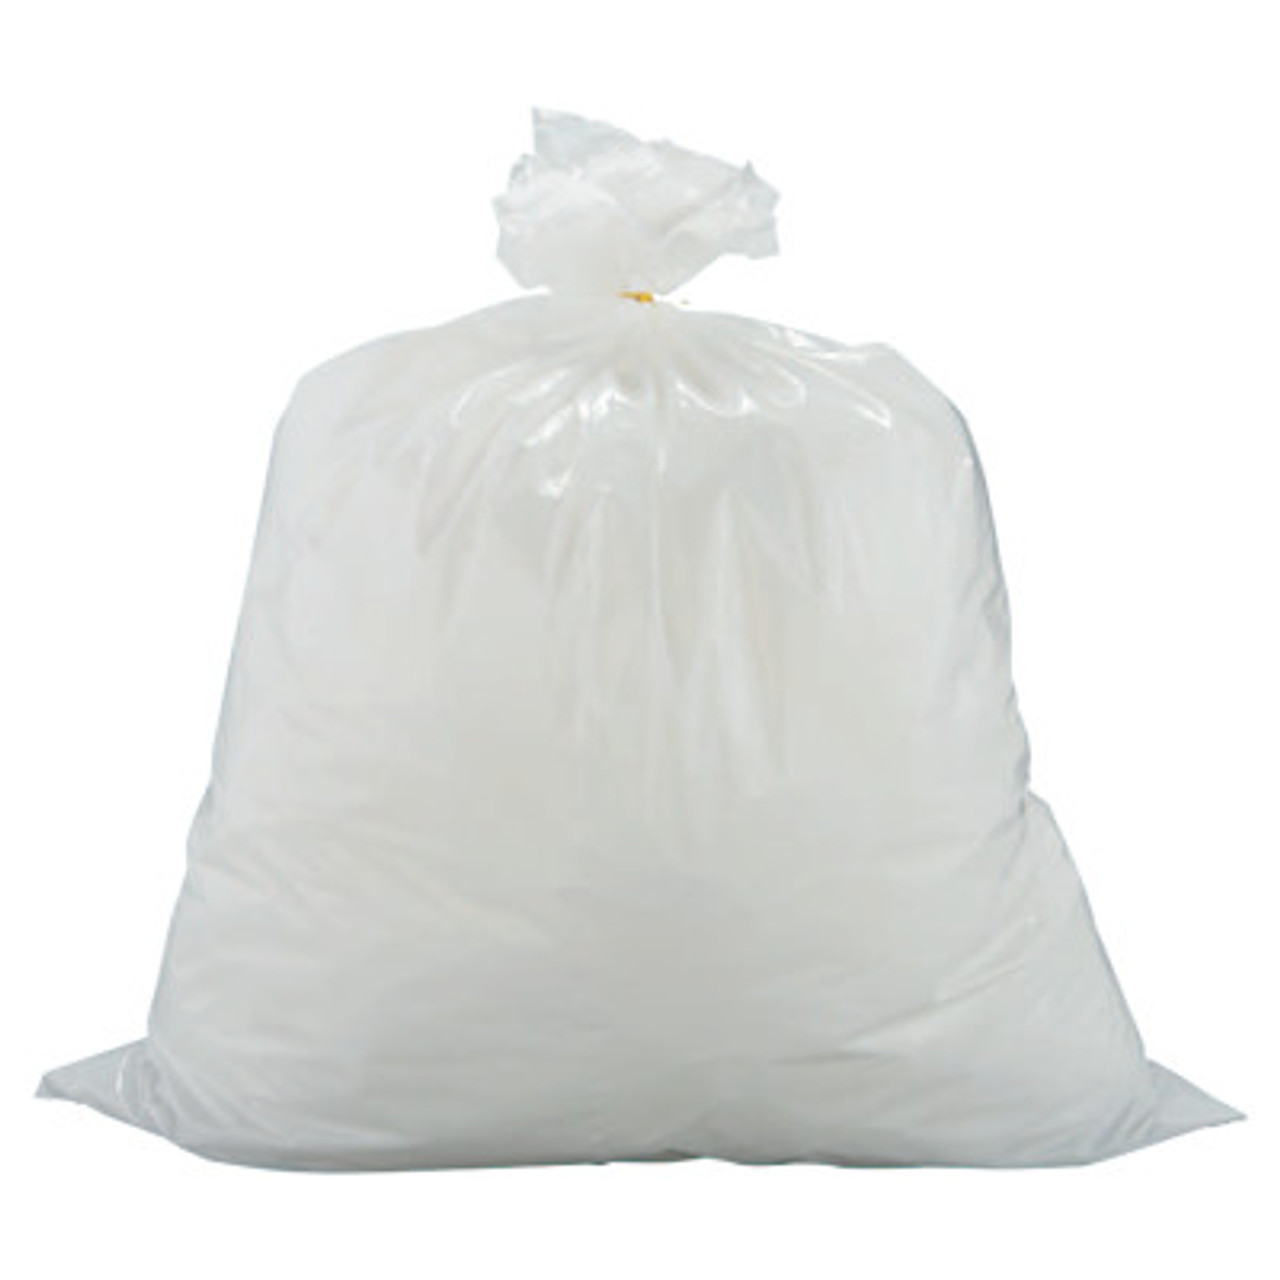 13 Gallon Trash Bags for Dispenser Trash Bin